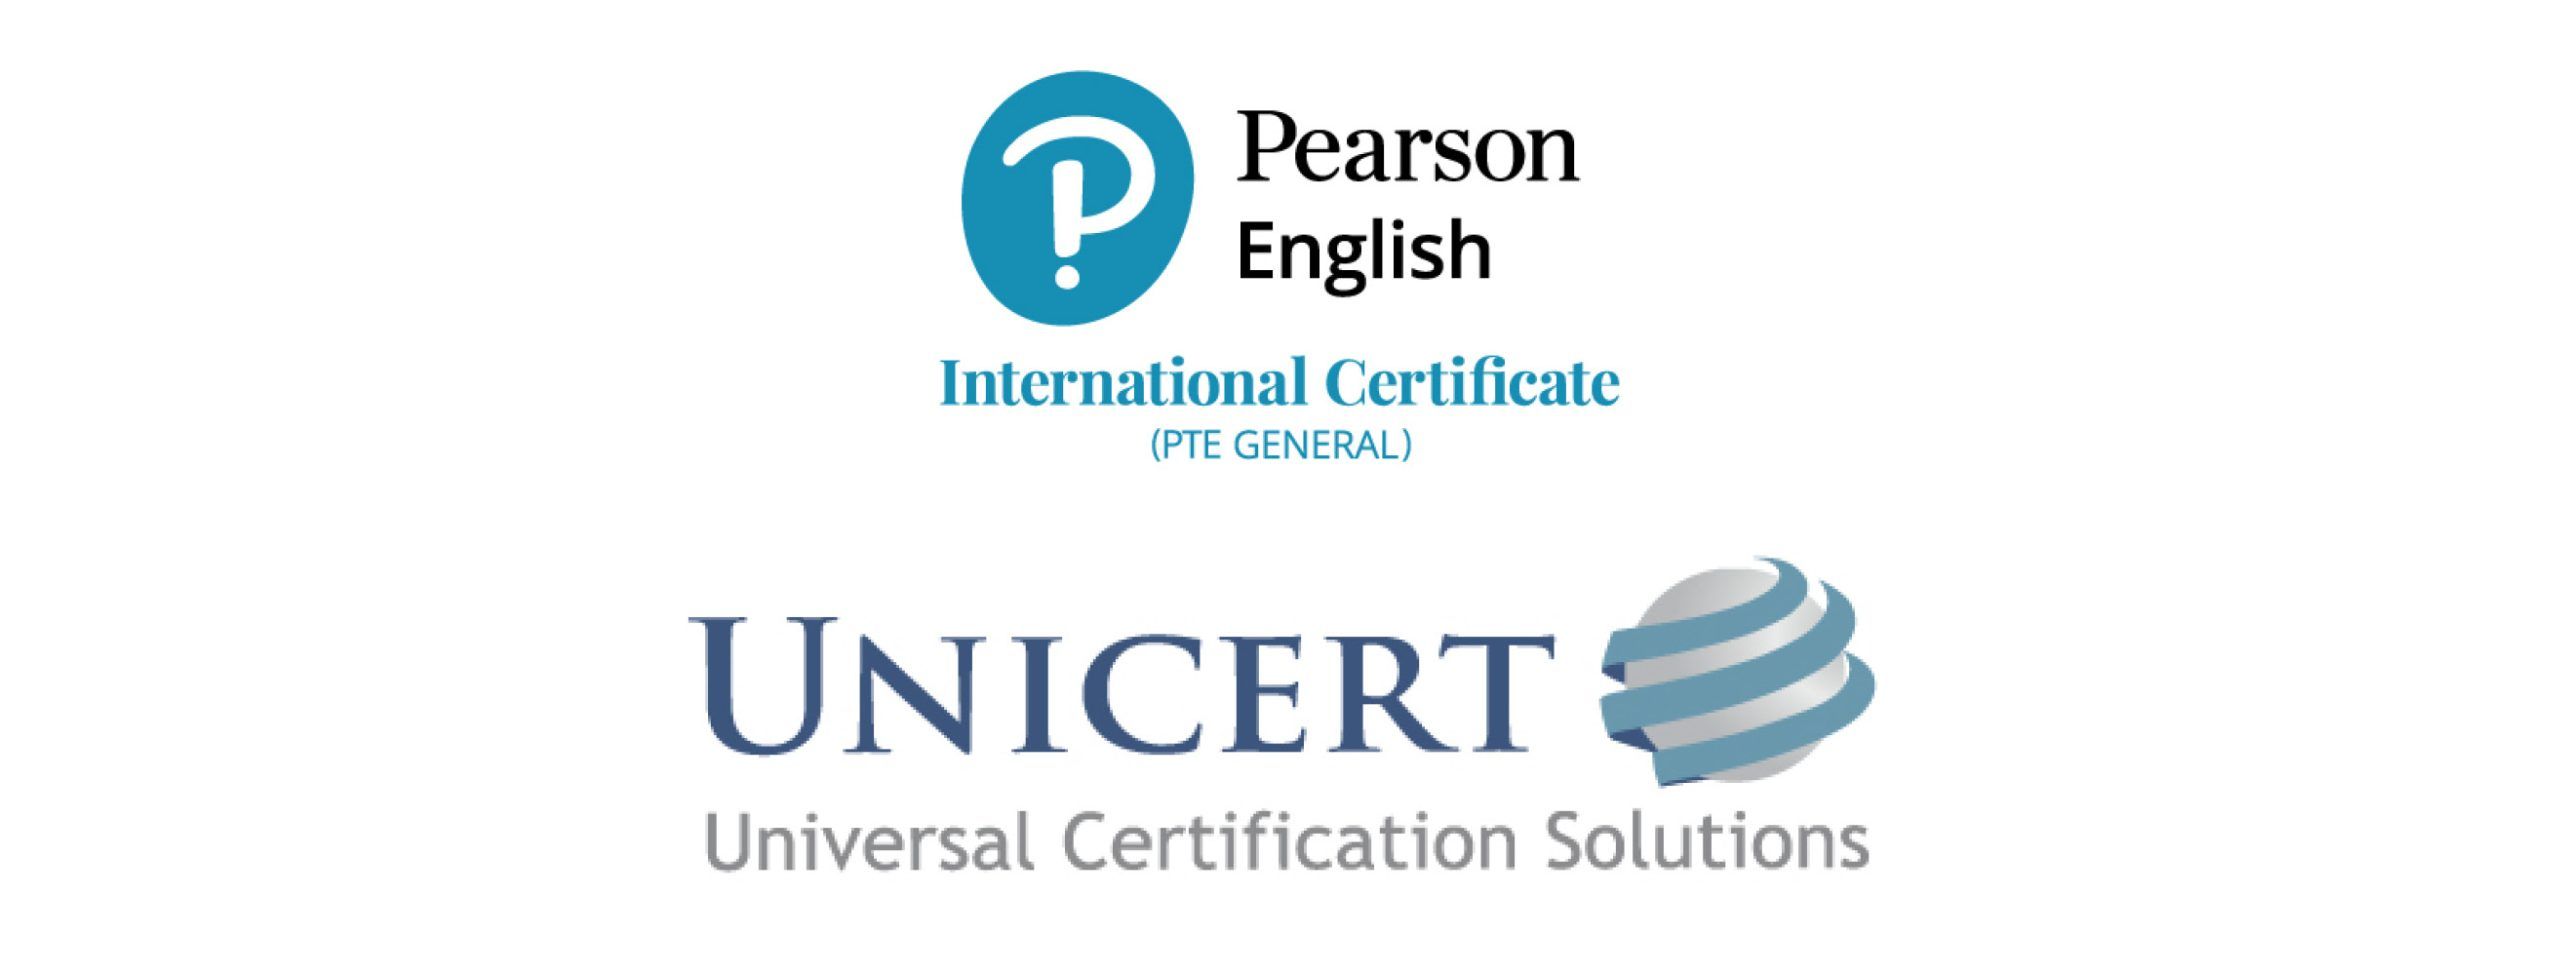 UNICERT SA - Pearson English International Certificate